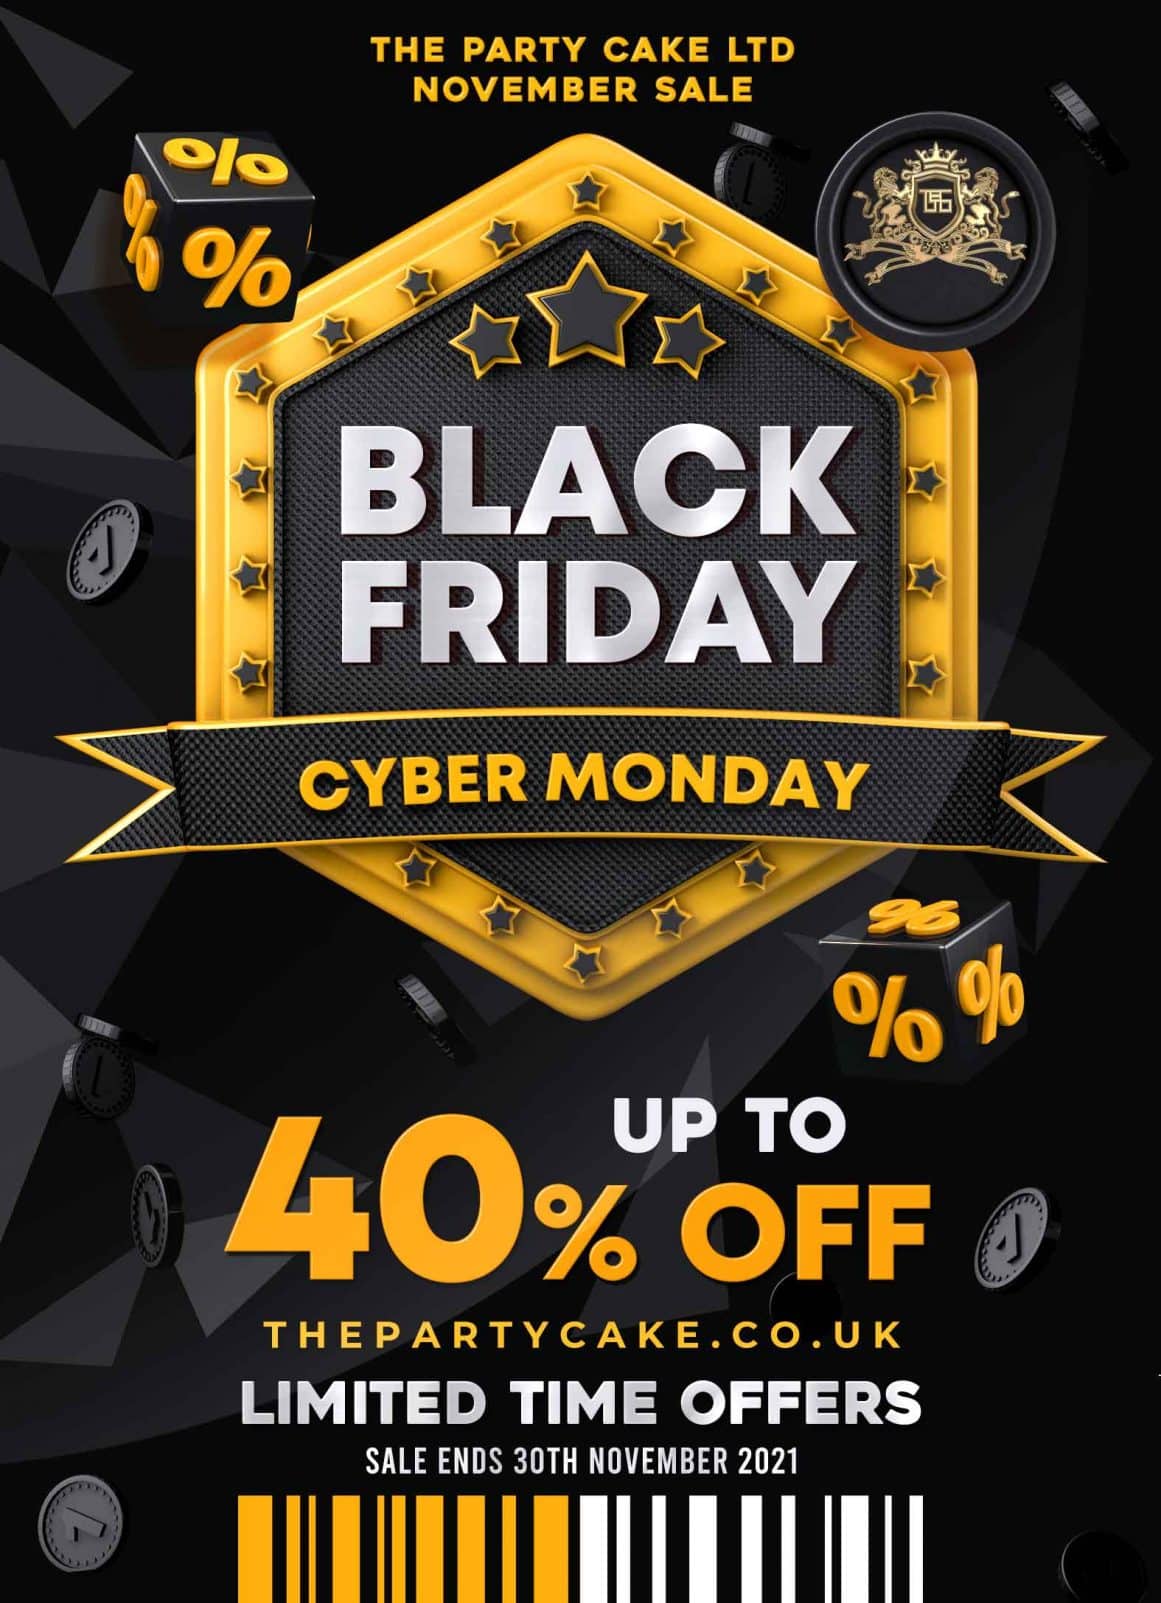 Black Friday - Cyber Monday Sale